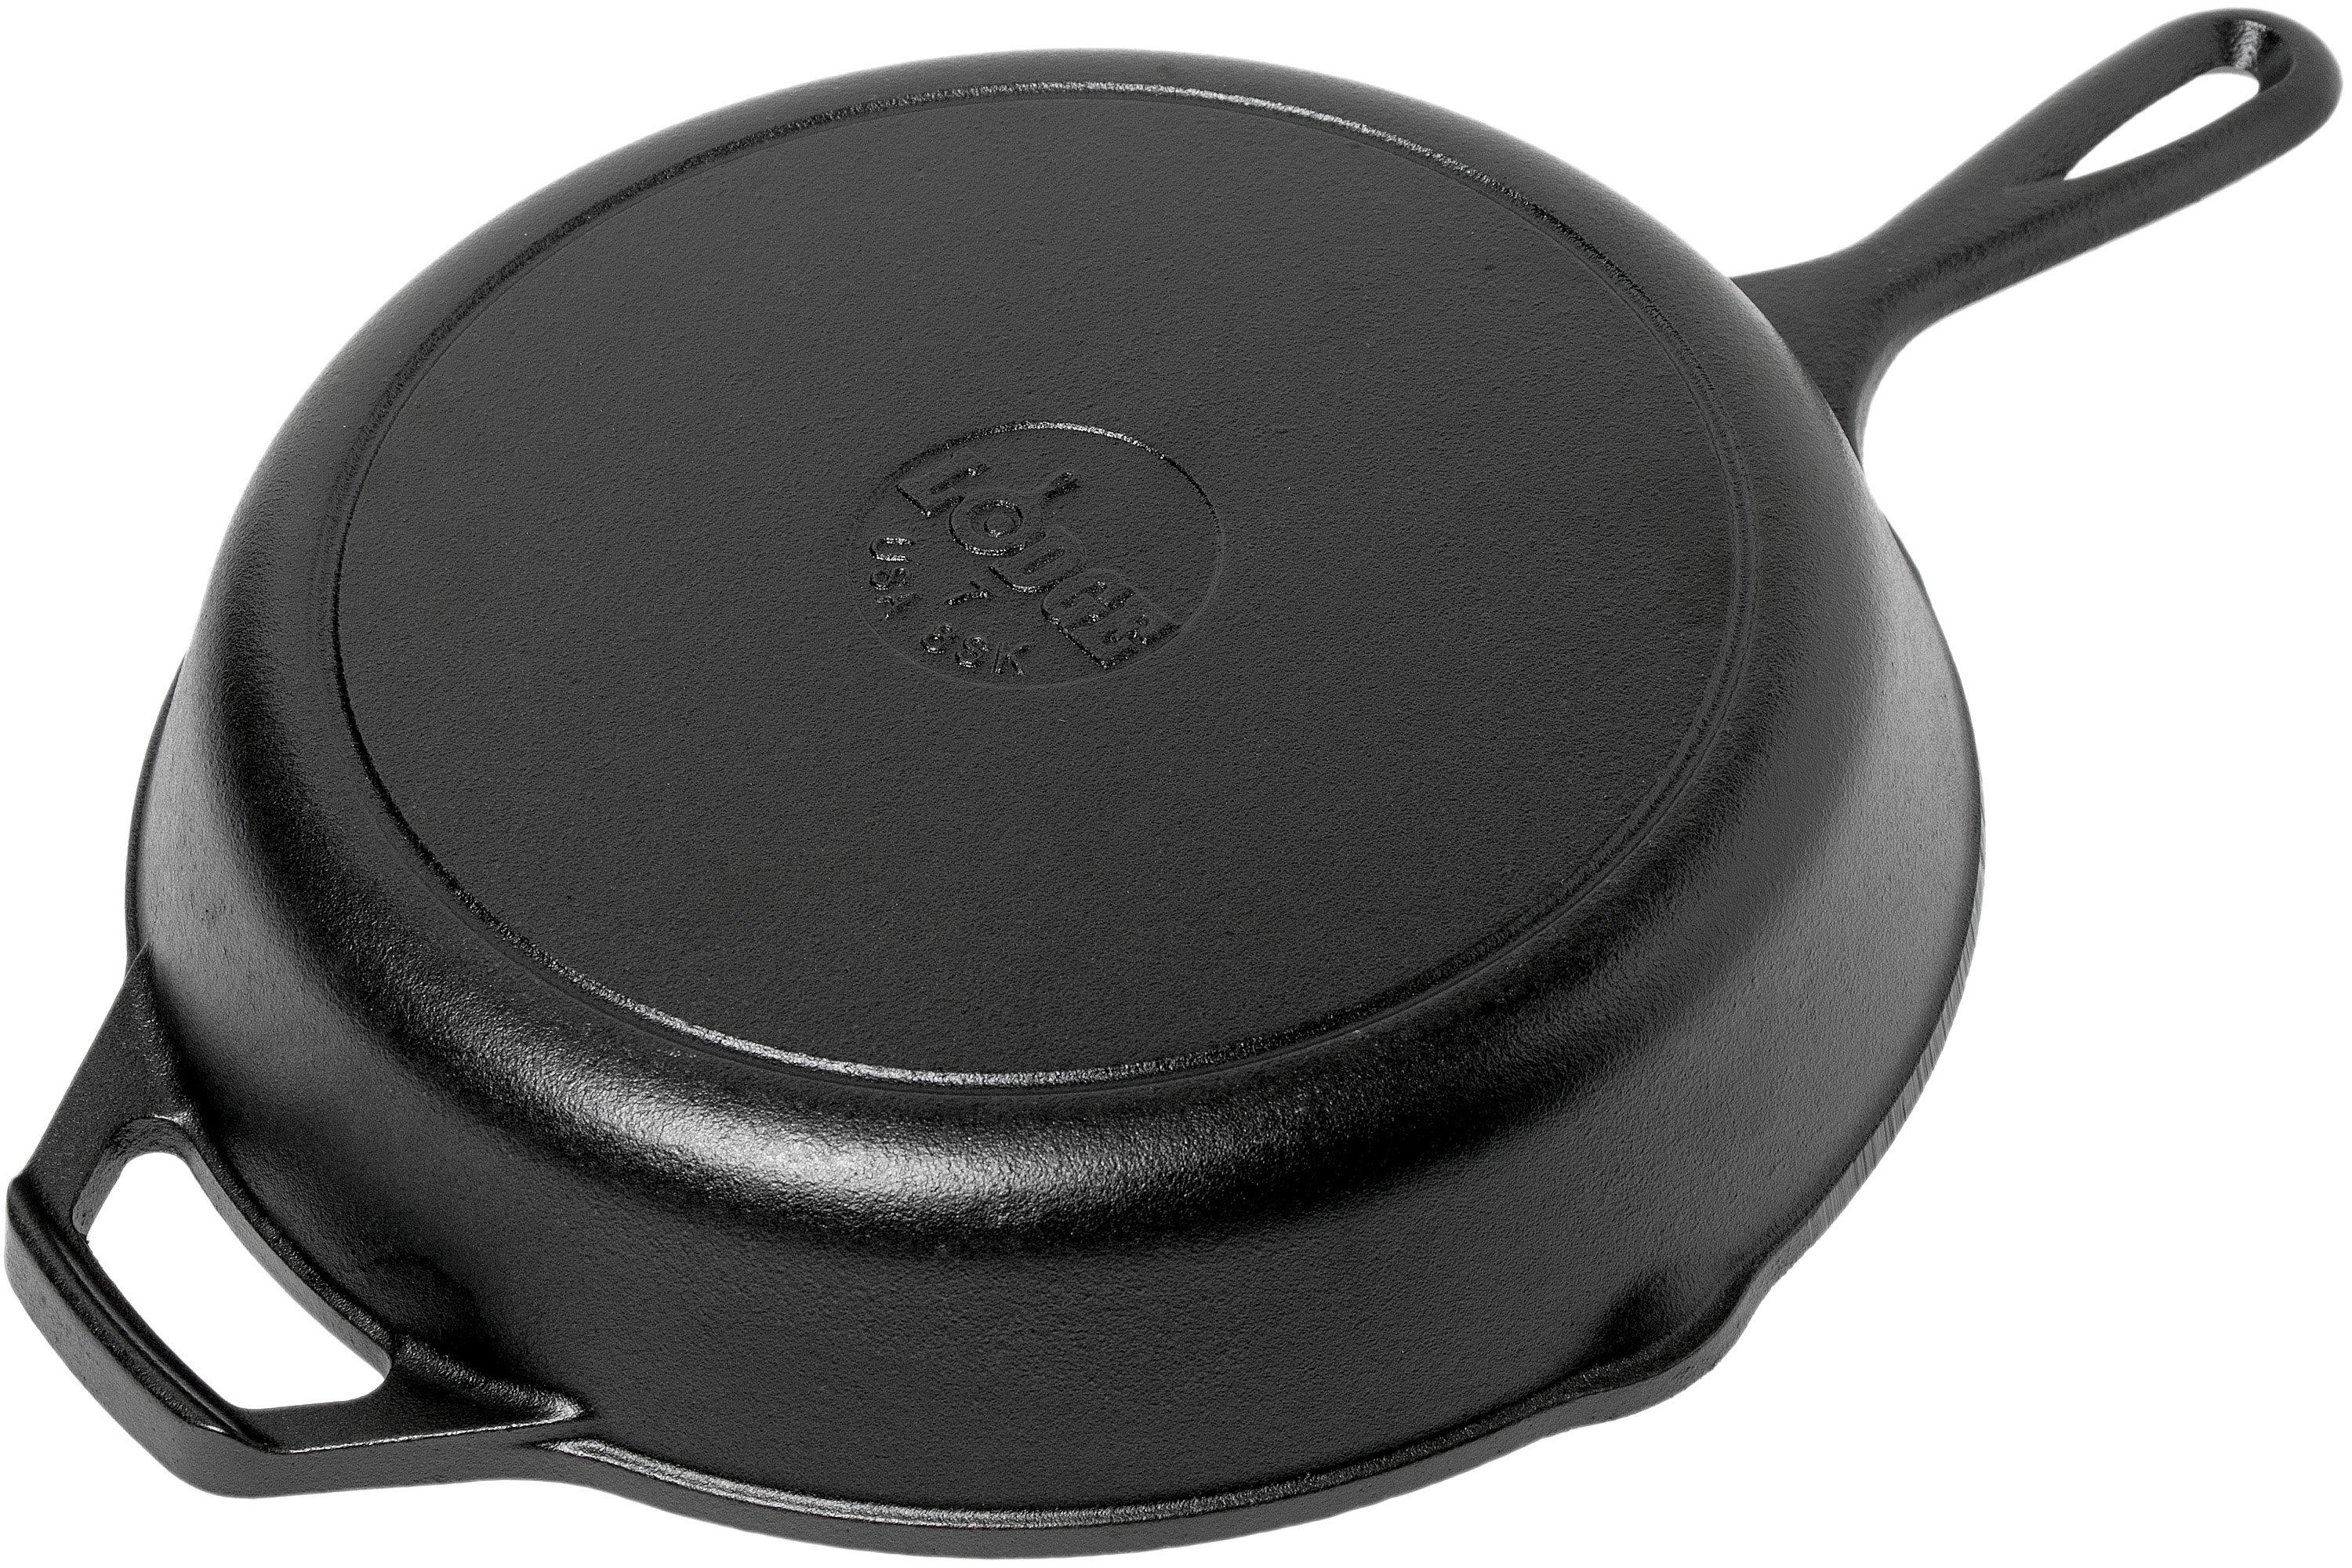 Lodge Classic Cast Iron frying pan L8SK3, diameter approx. 26 cm